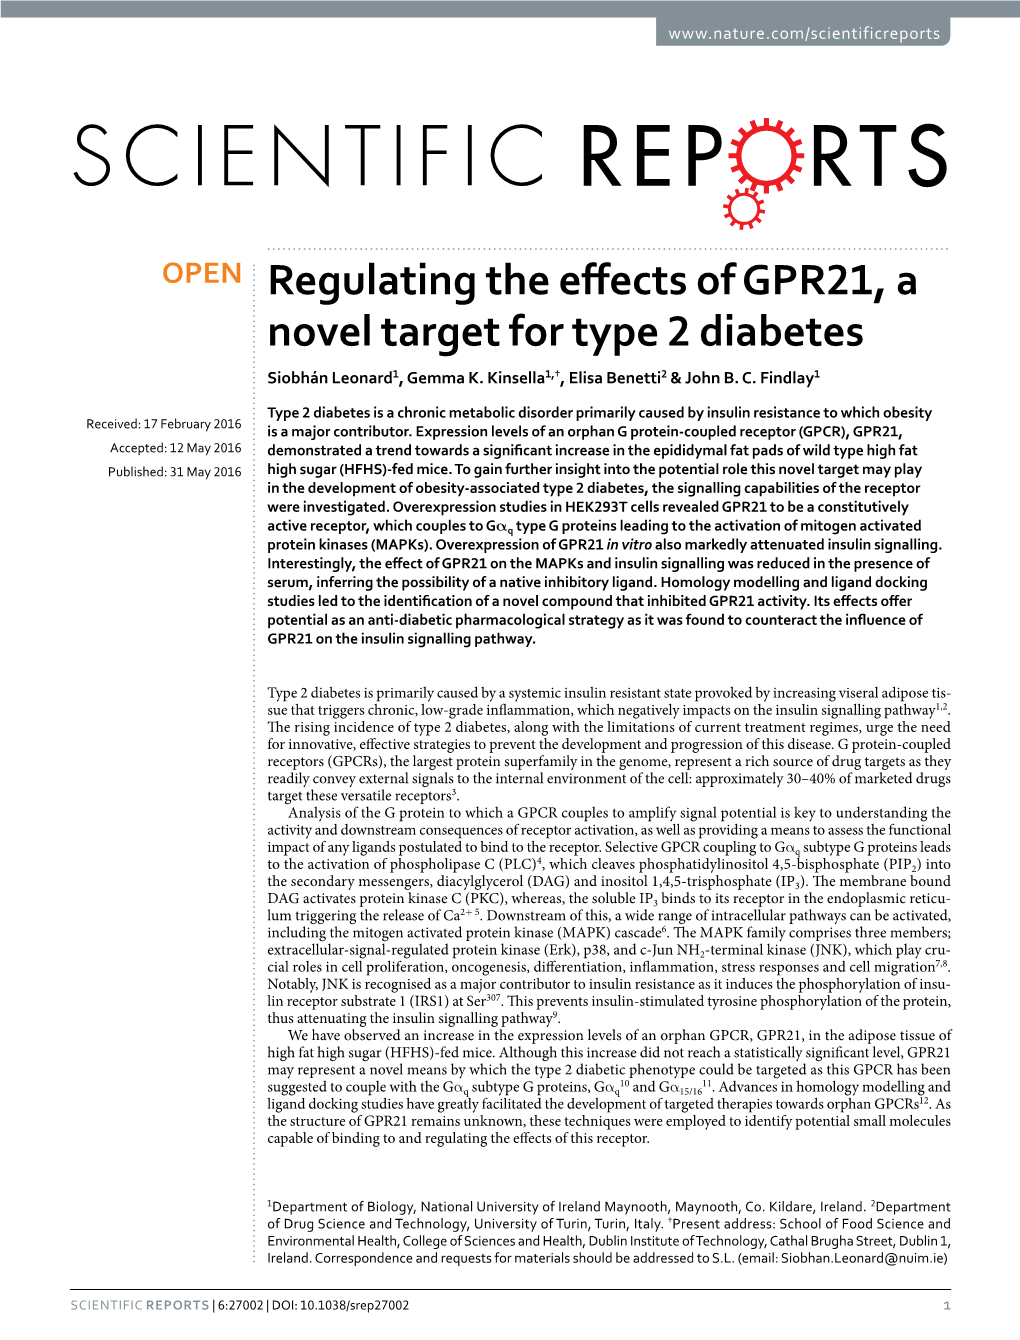 Regulating the Effects of GPR21, a Novel Target for Type 2 Diabetes Siobhán Leonard1, Gemma K